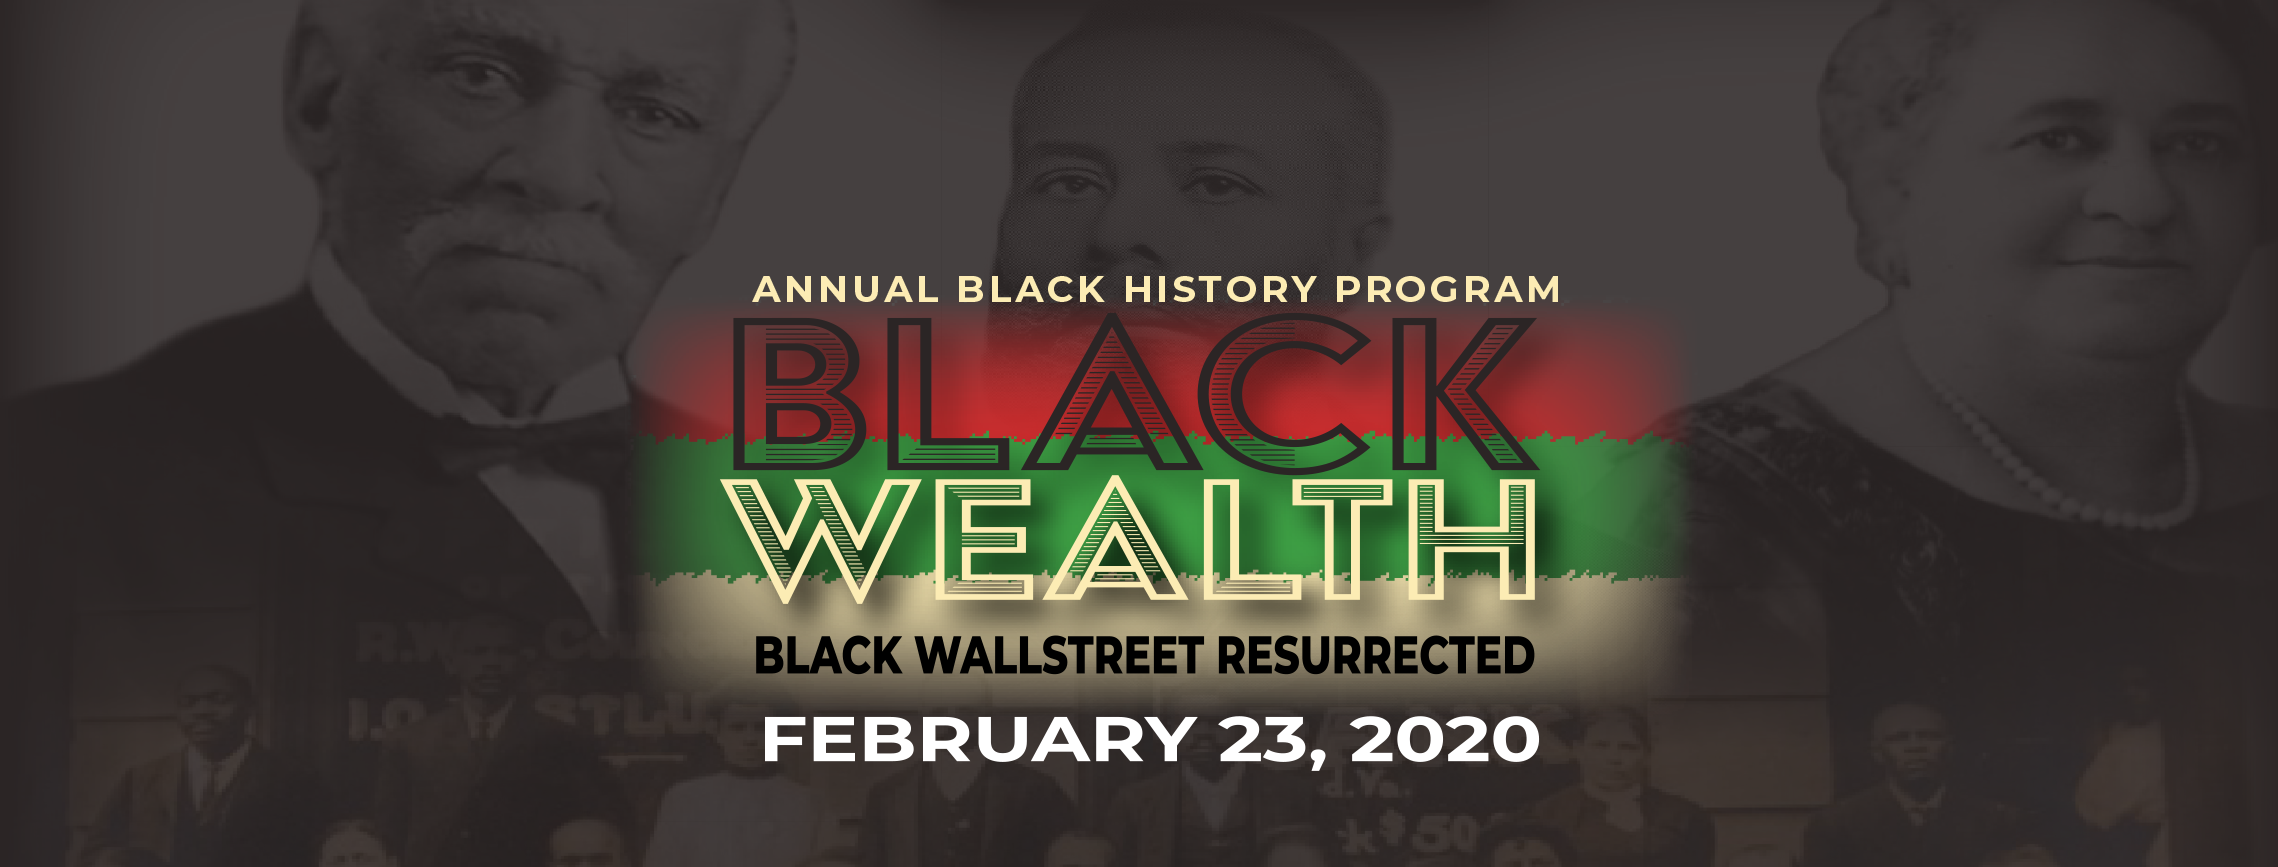 Black Wealth - Black Wallstreet Resurrected